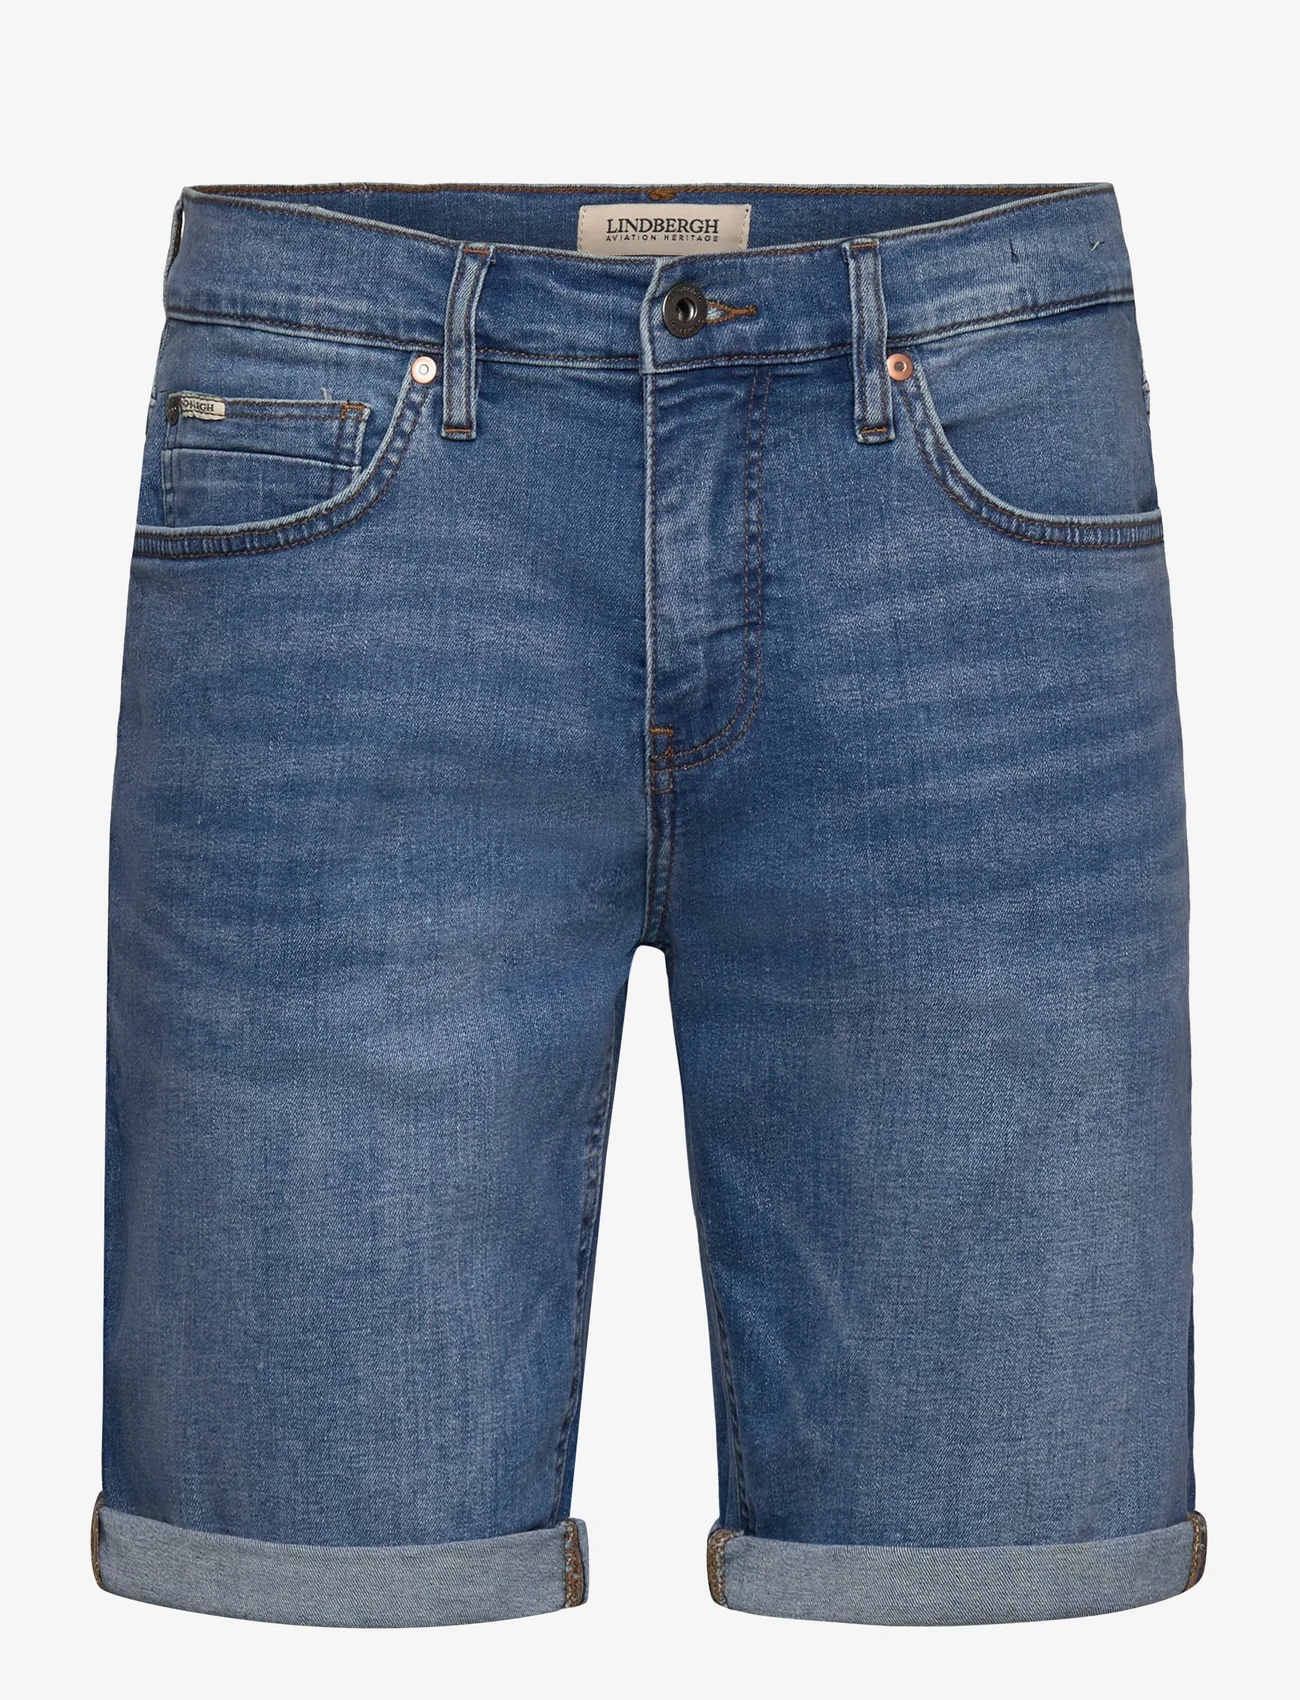 Lindbergh - Superflex denim shorts - jeans shorts - pale blue - 0